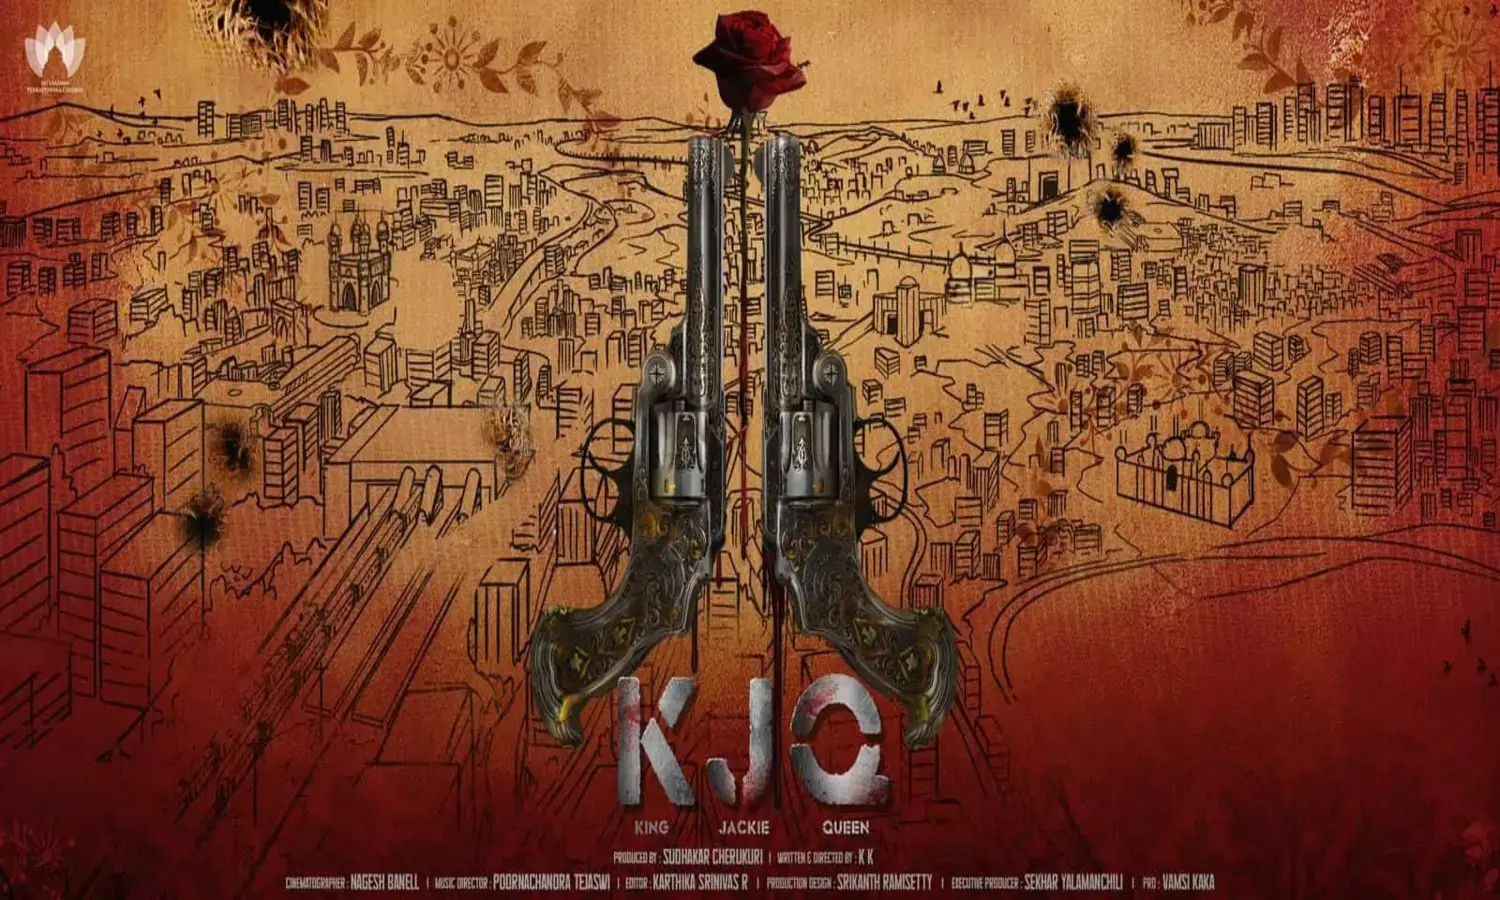 New Telugu Film KJQ - King Jackie Queen